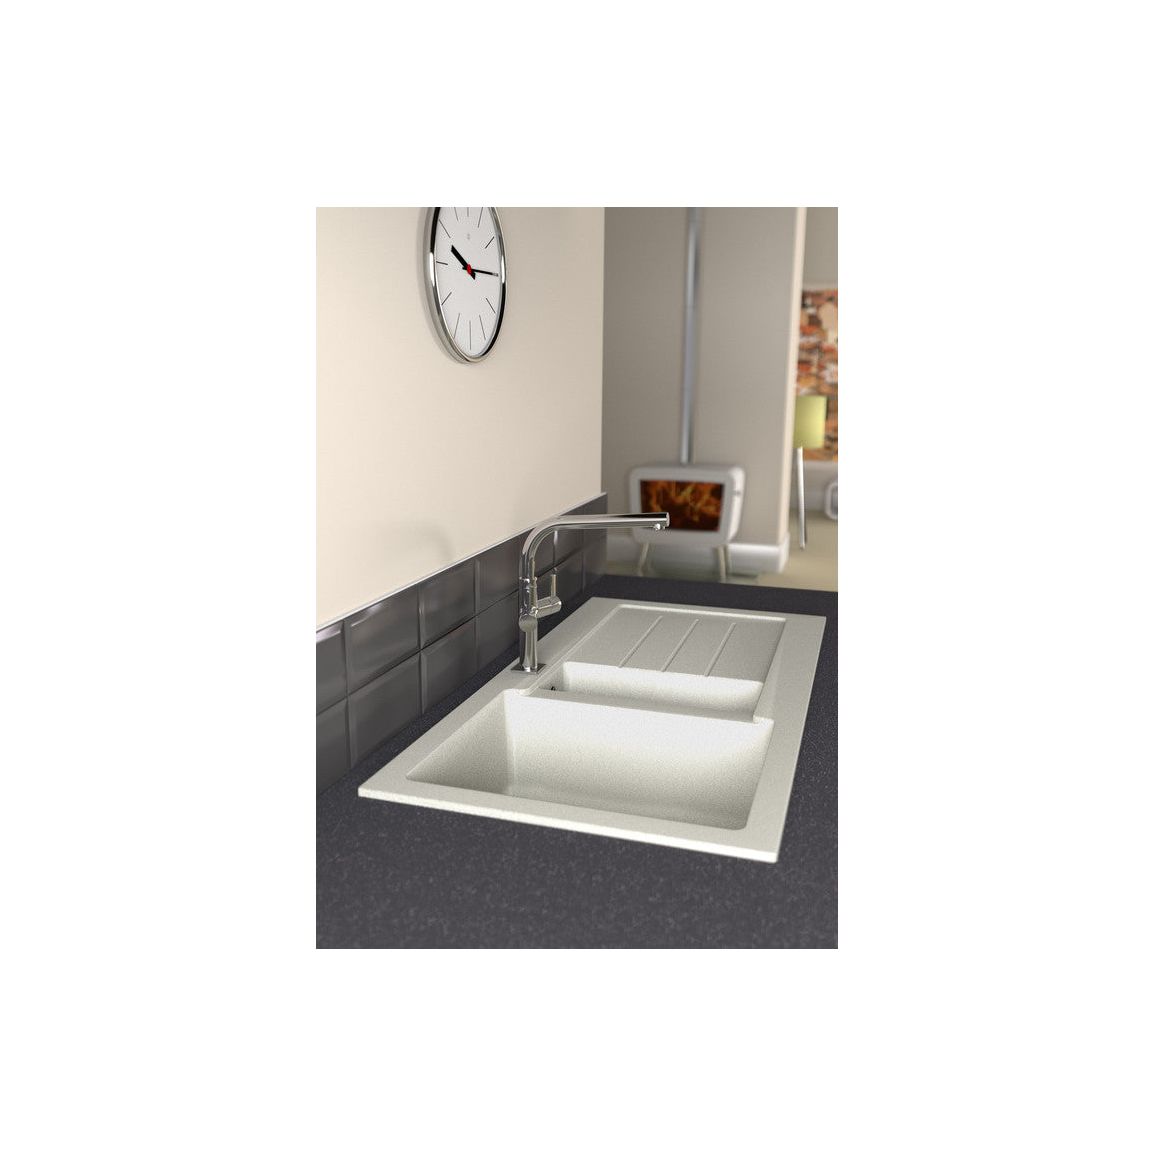 Abode Xcite 1.5B & Drainer Granite Inset Sink - Frost White